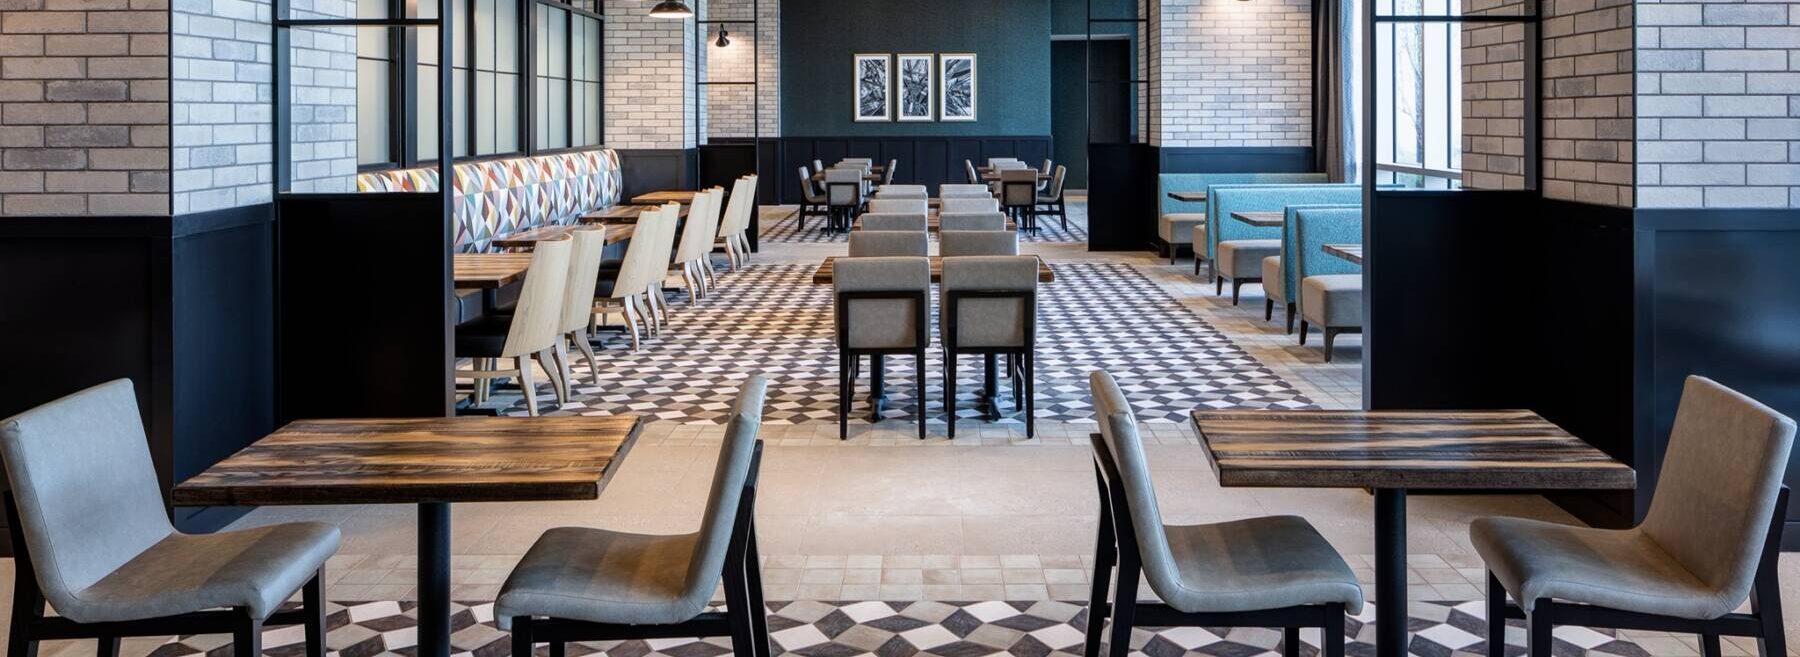 Choctaw Casino & Resort dining area. This image shows geometric patterned tile flooring that illustrates superior flooring installation capabilities.